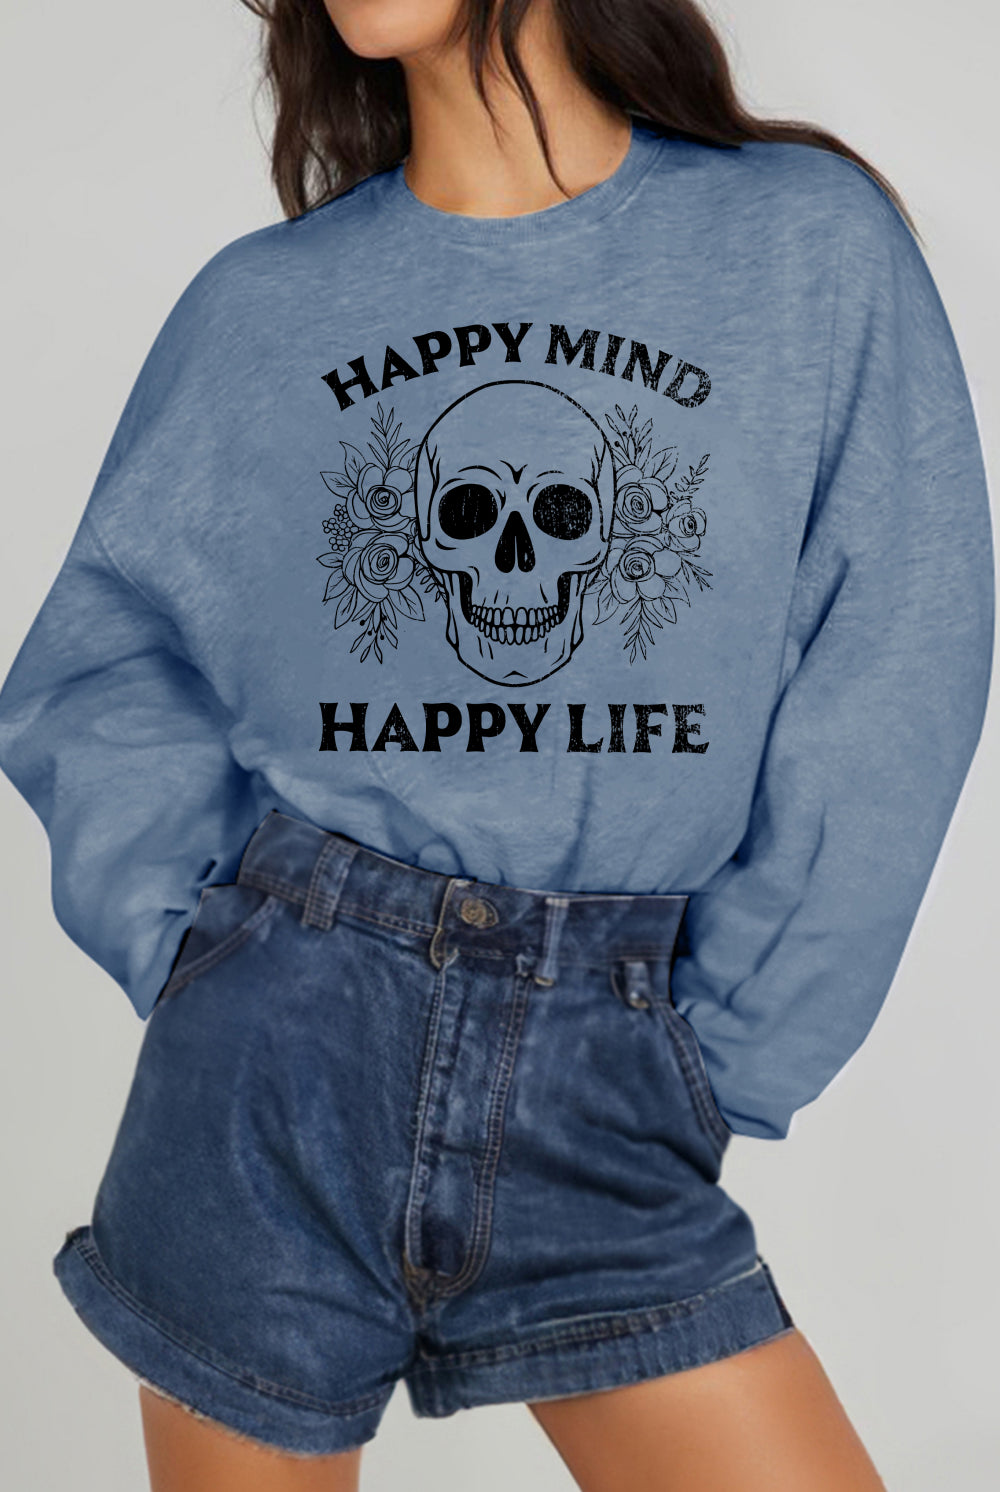 Slate Gray Simply Love Simply Love Full Size HAPPY MIND HAPPY LIFE SKULL Graphic Sweatshirt Sweatshirts